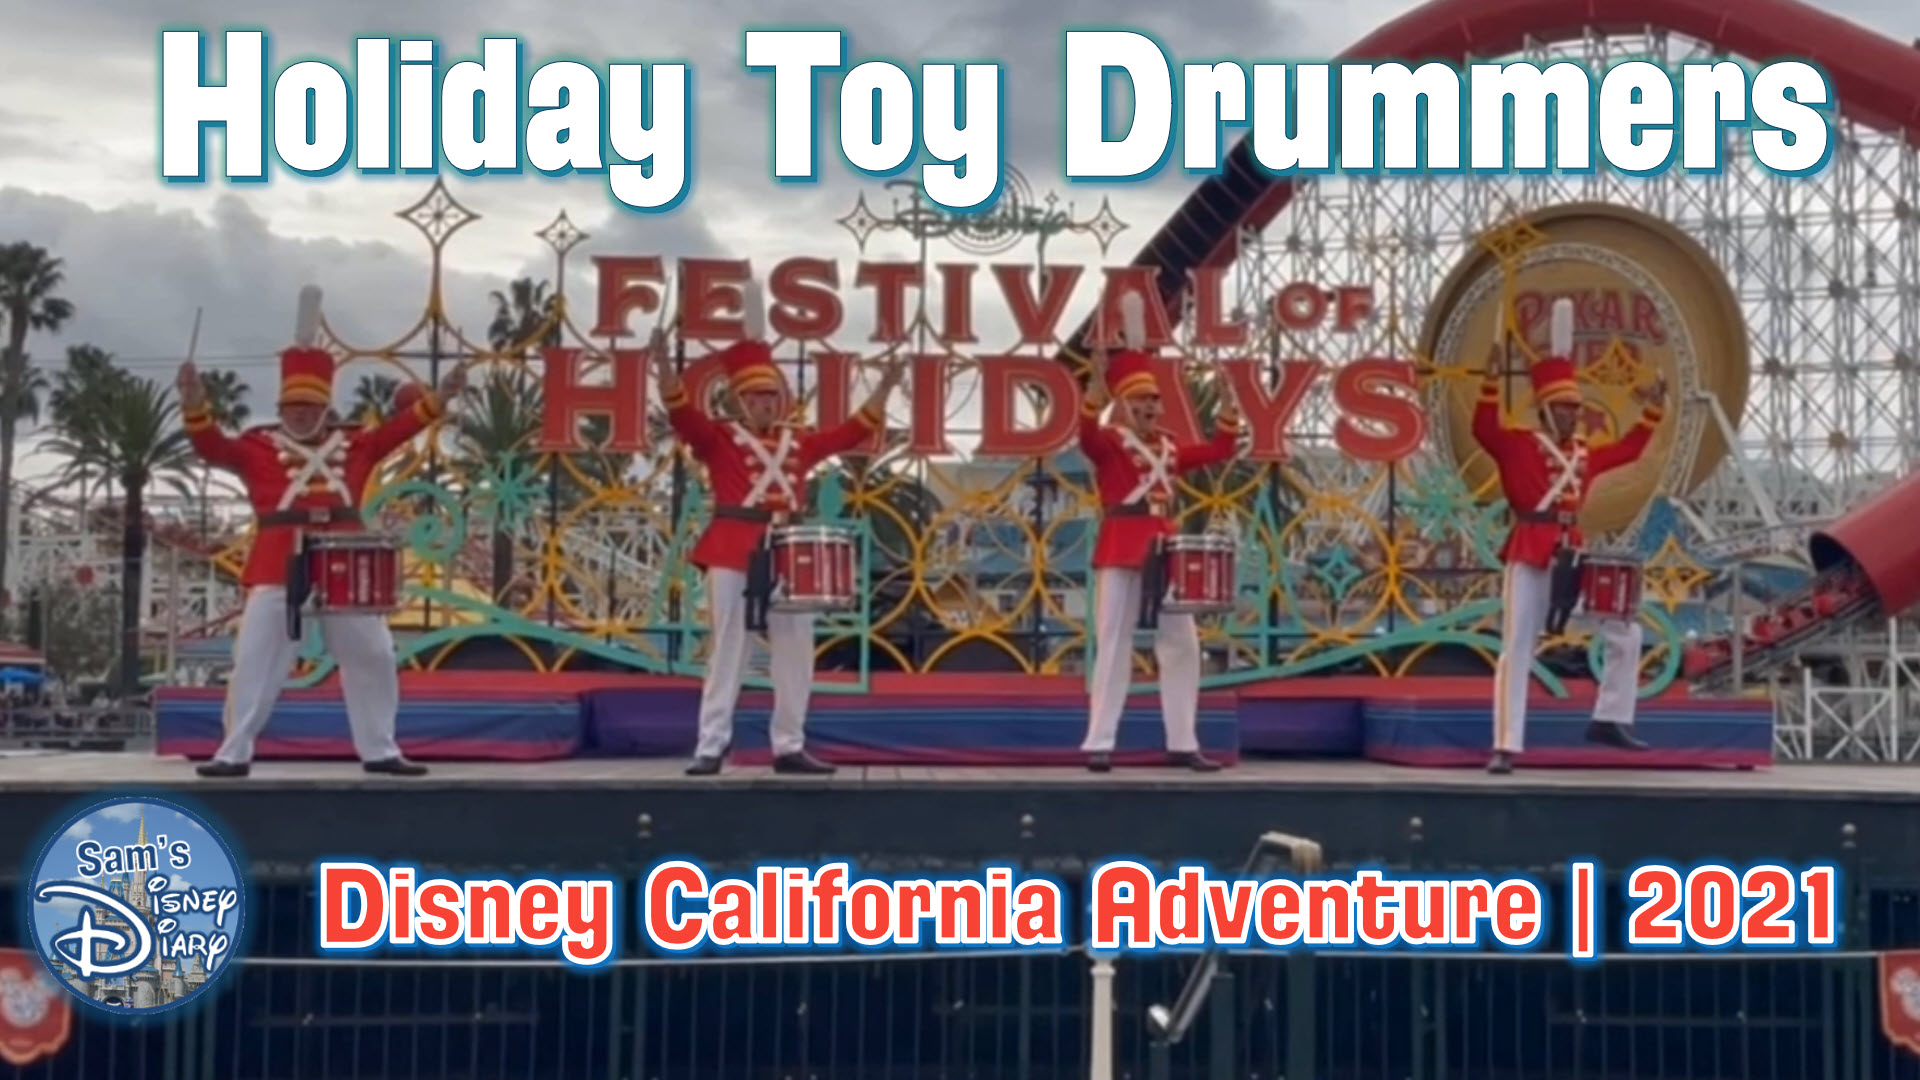 Disneyland Christmas | Disney California Adventure | Festival of Holidays | Holiday Toy Drummers